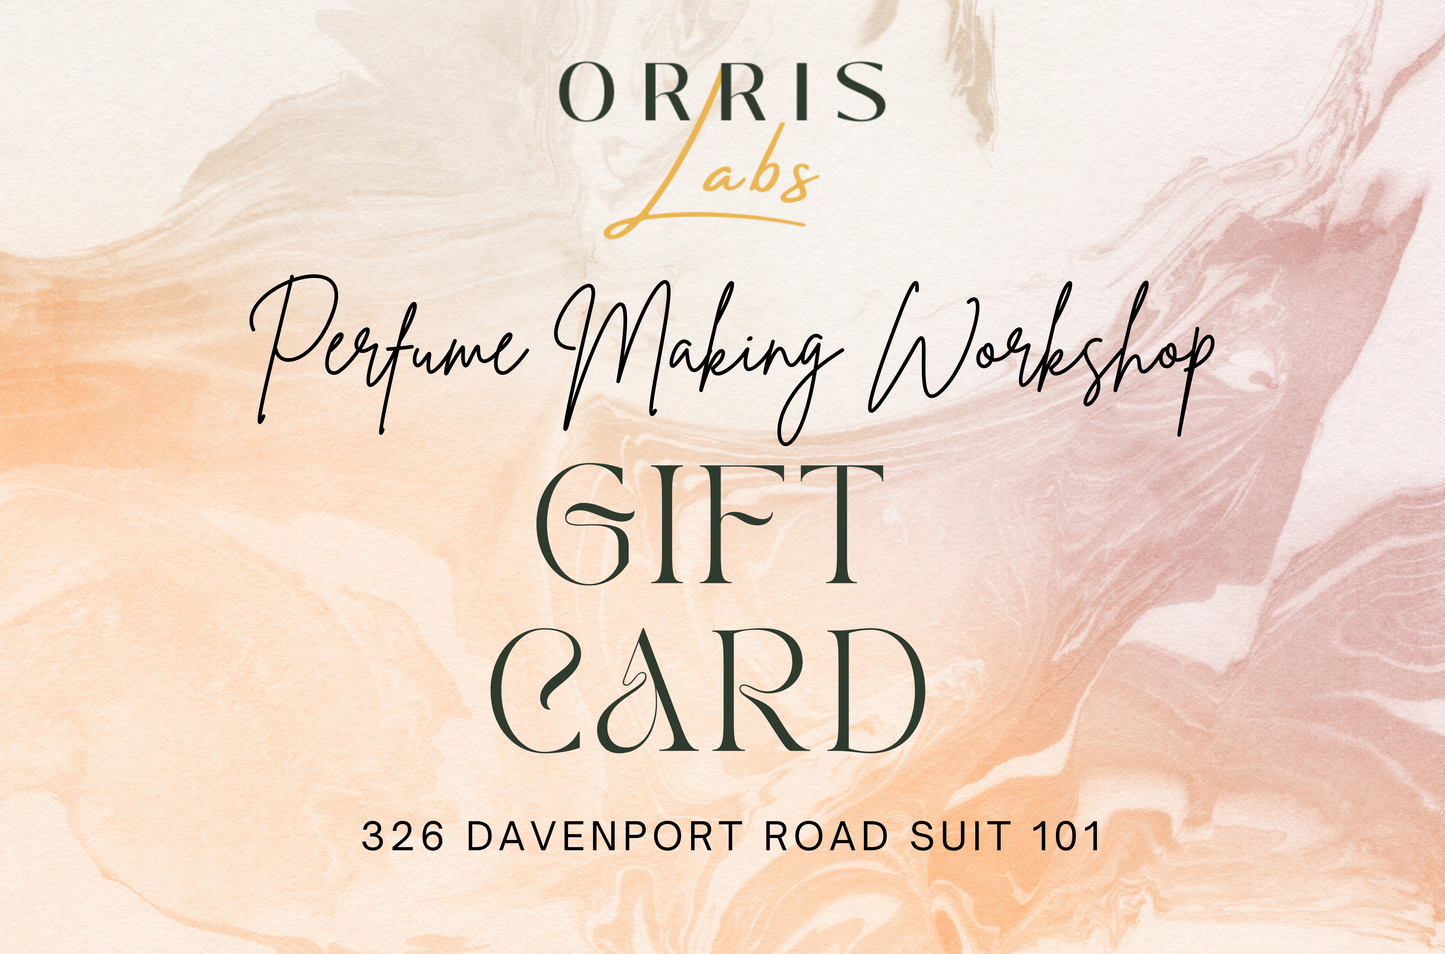 Orris Labs Toronto Perfume | Cologne Making Workshop Gift Card